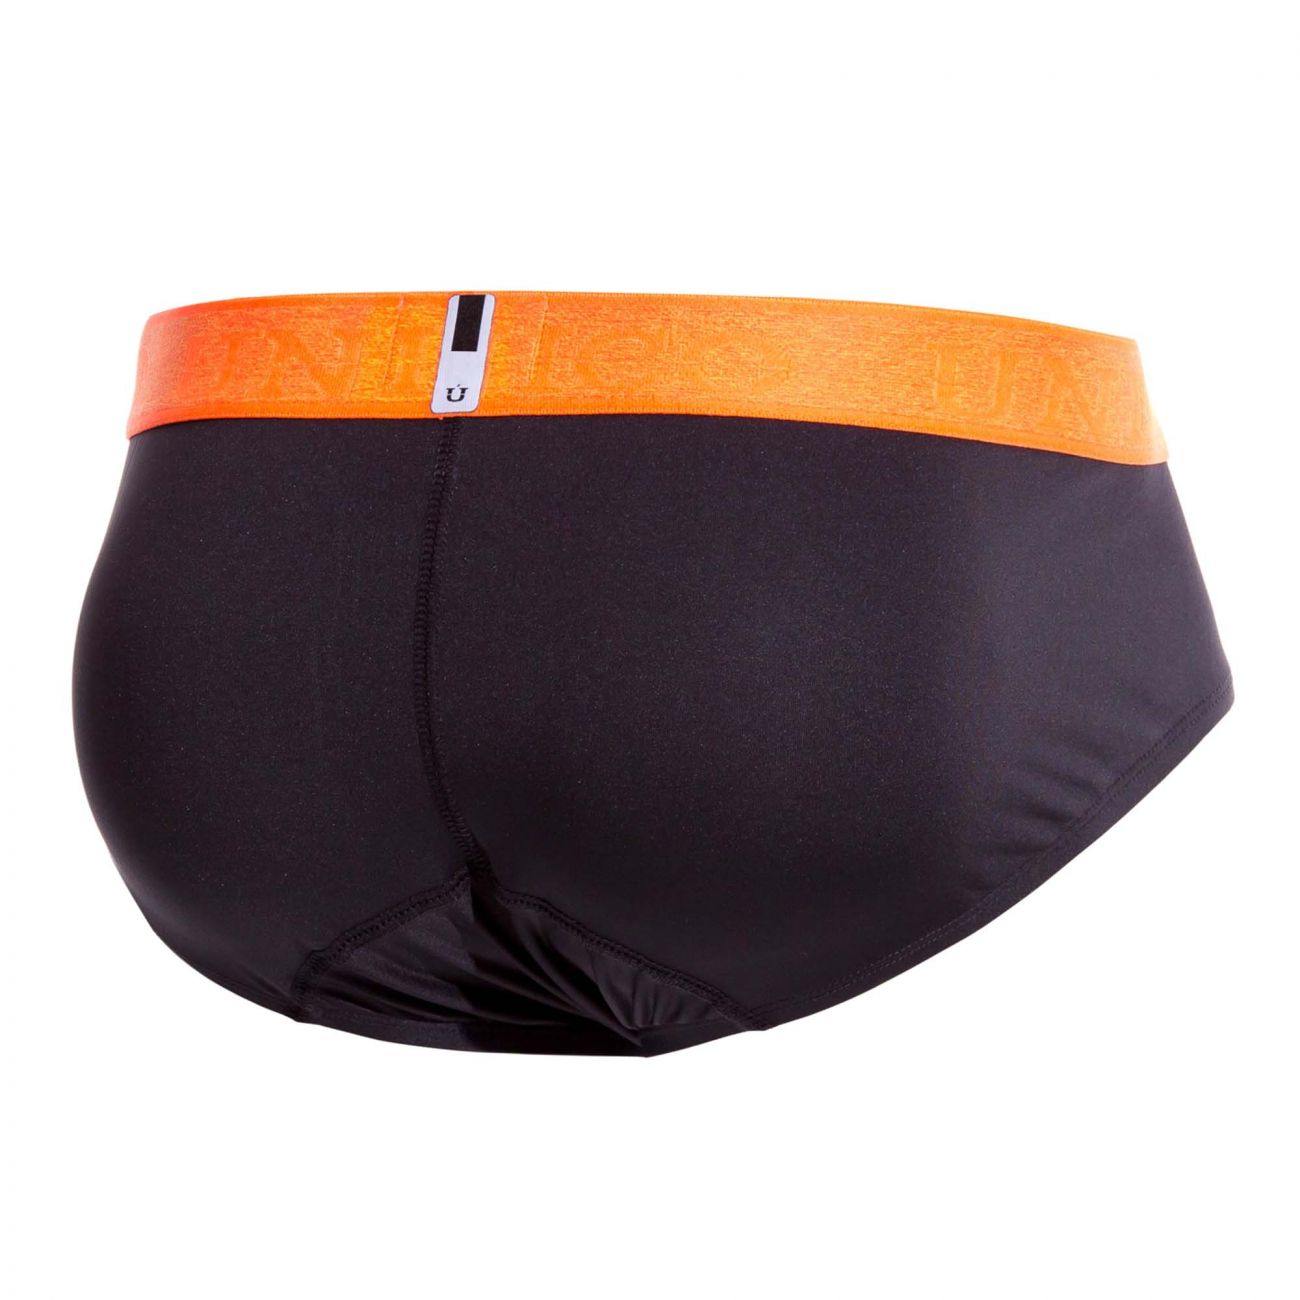 Mens Underwear: Unico 19160201114 COLORS Vigoroso Briefs | eBay